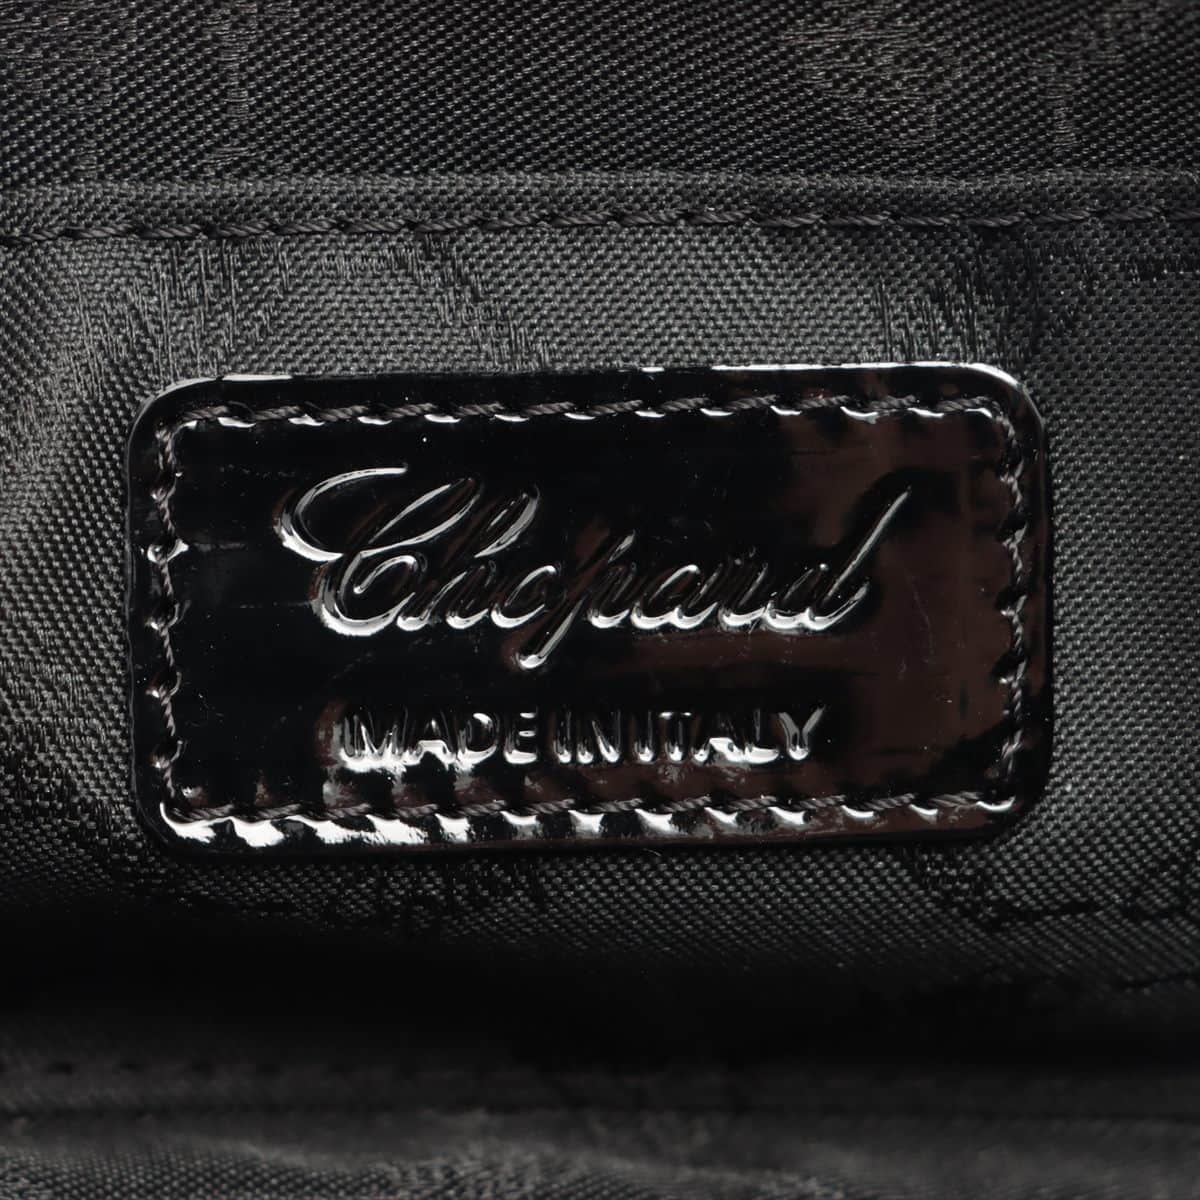 Chopard Evening Patent leather Clutch bag Black